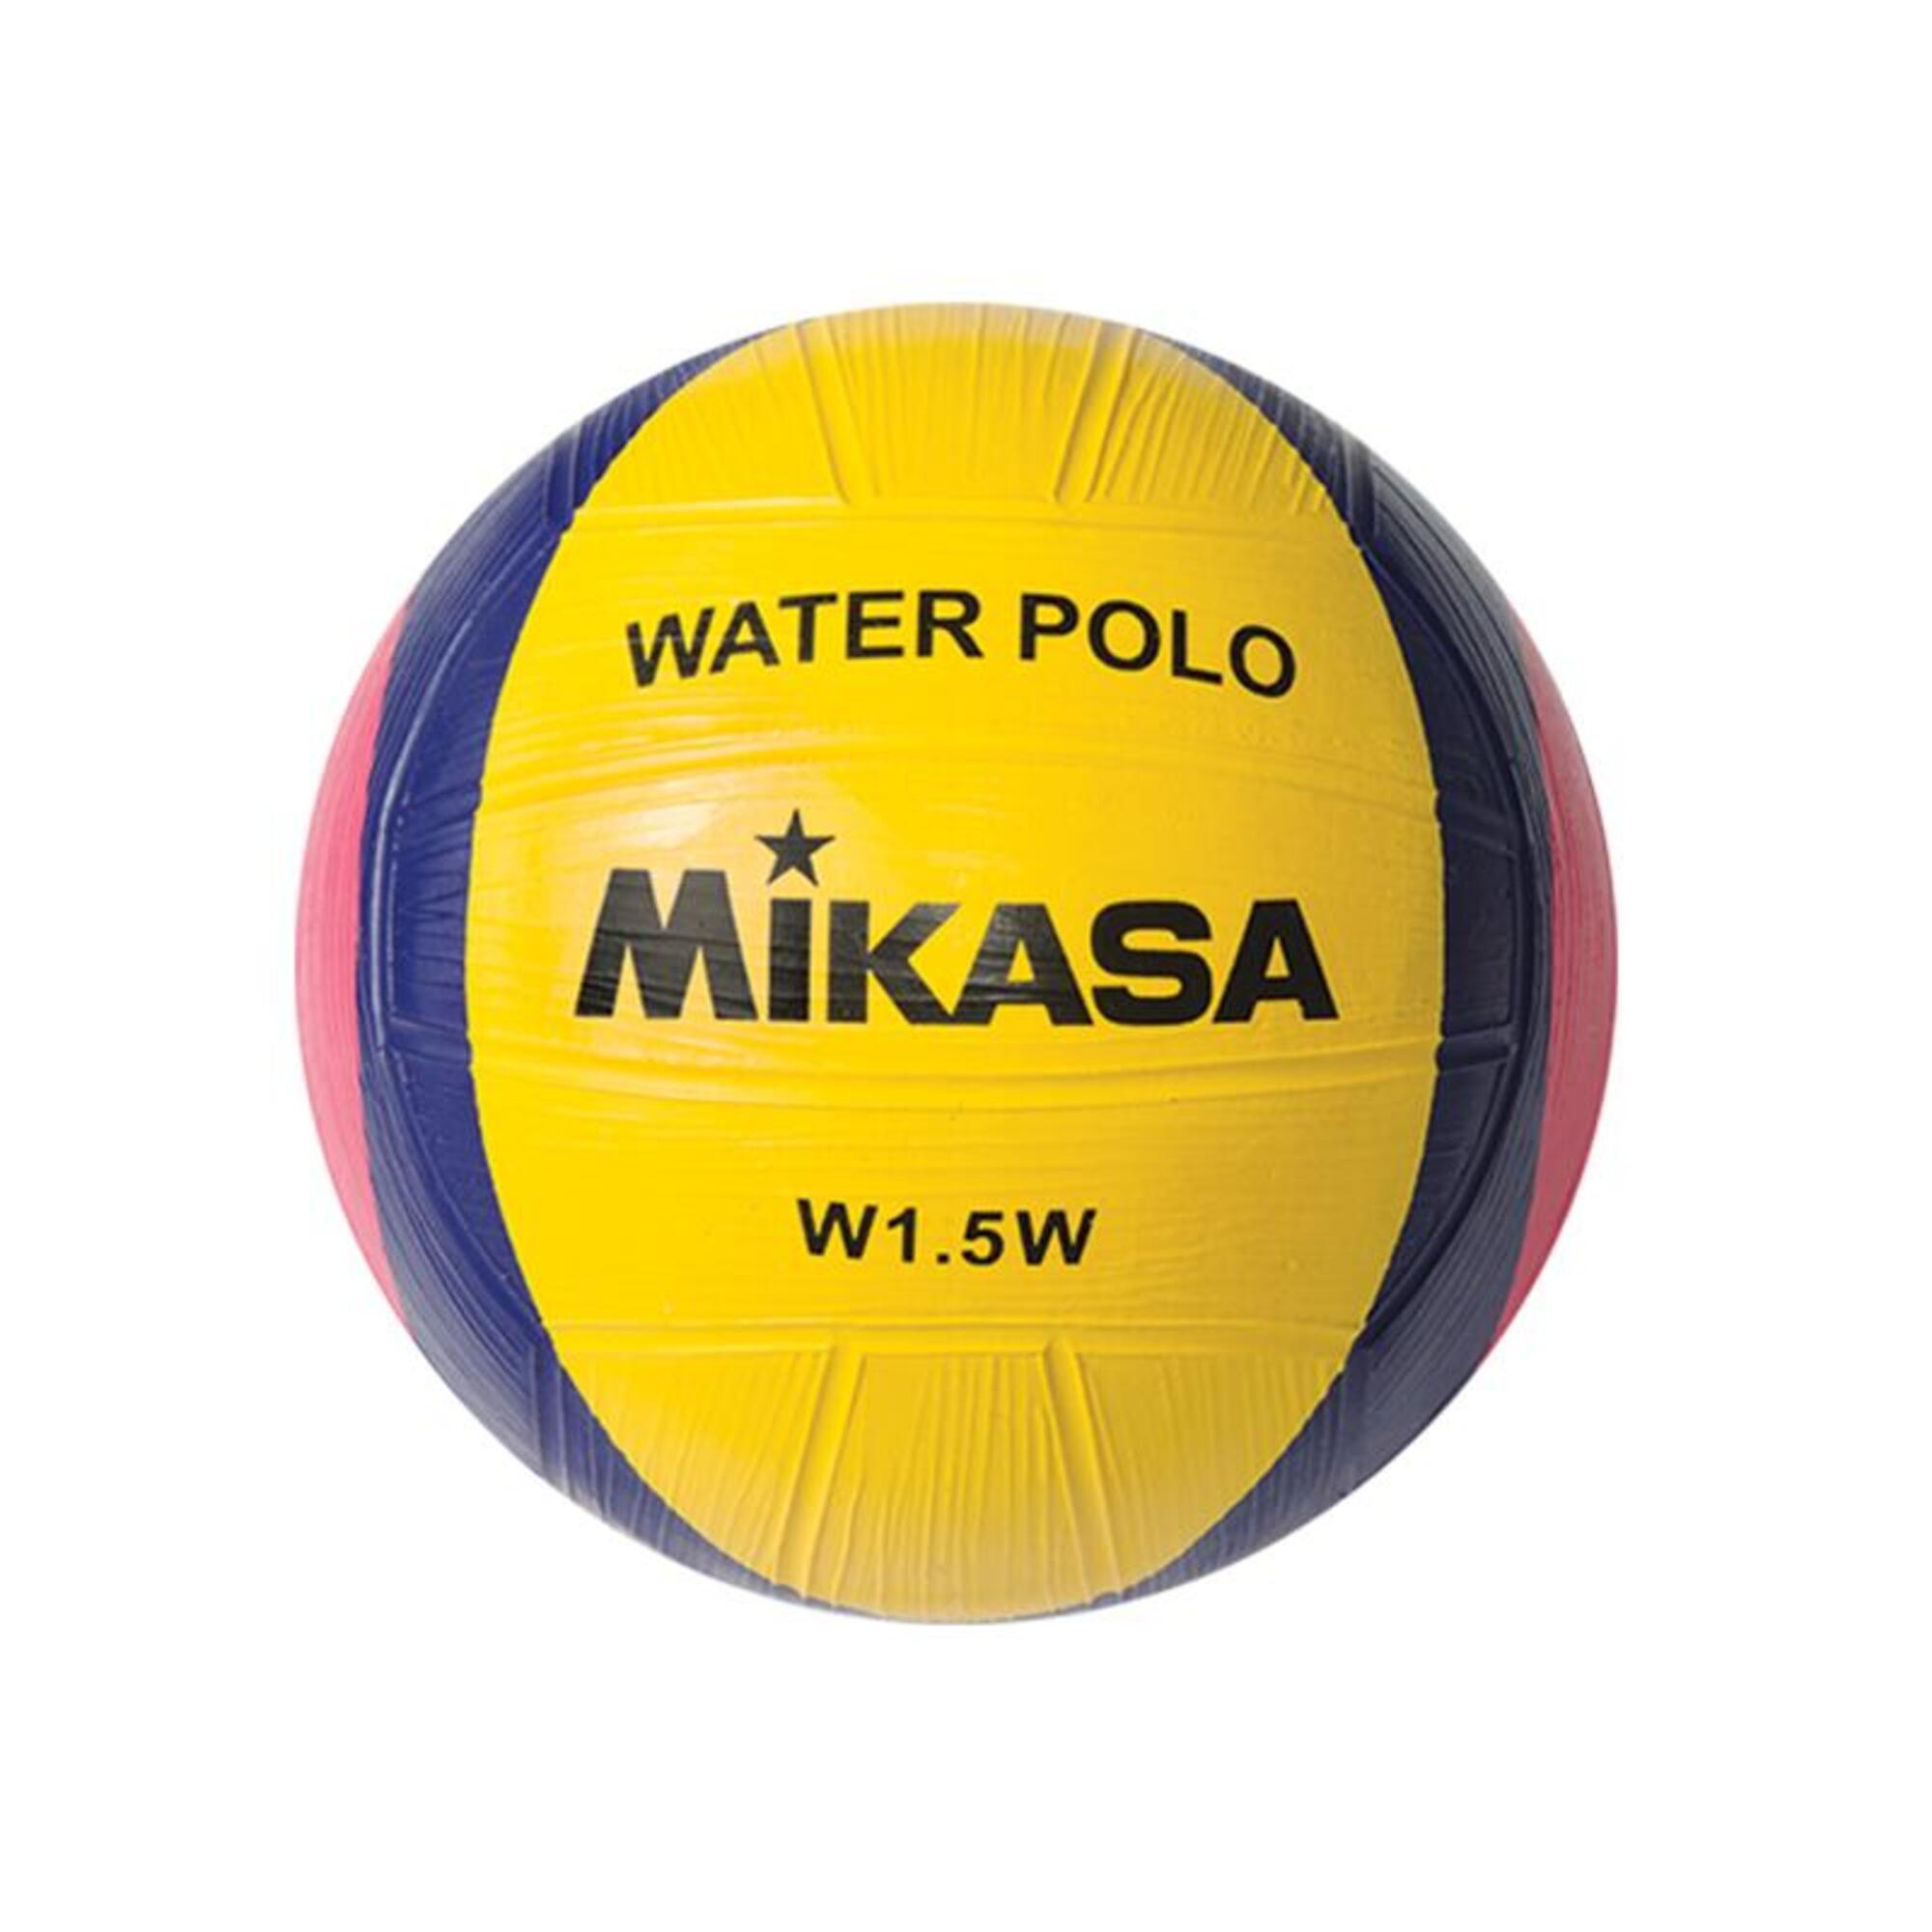 Mikasa W1.5W 紀念水球